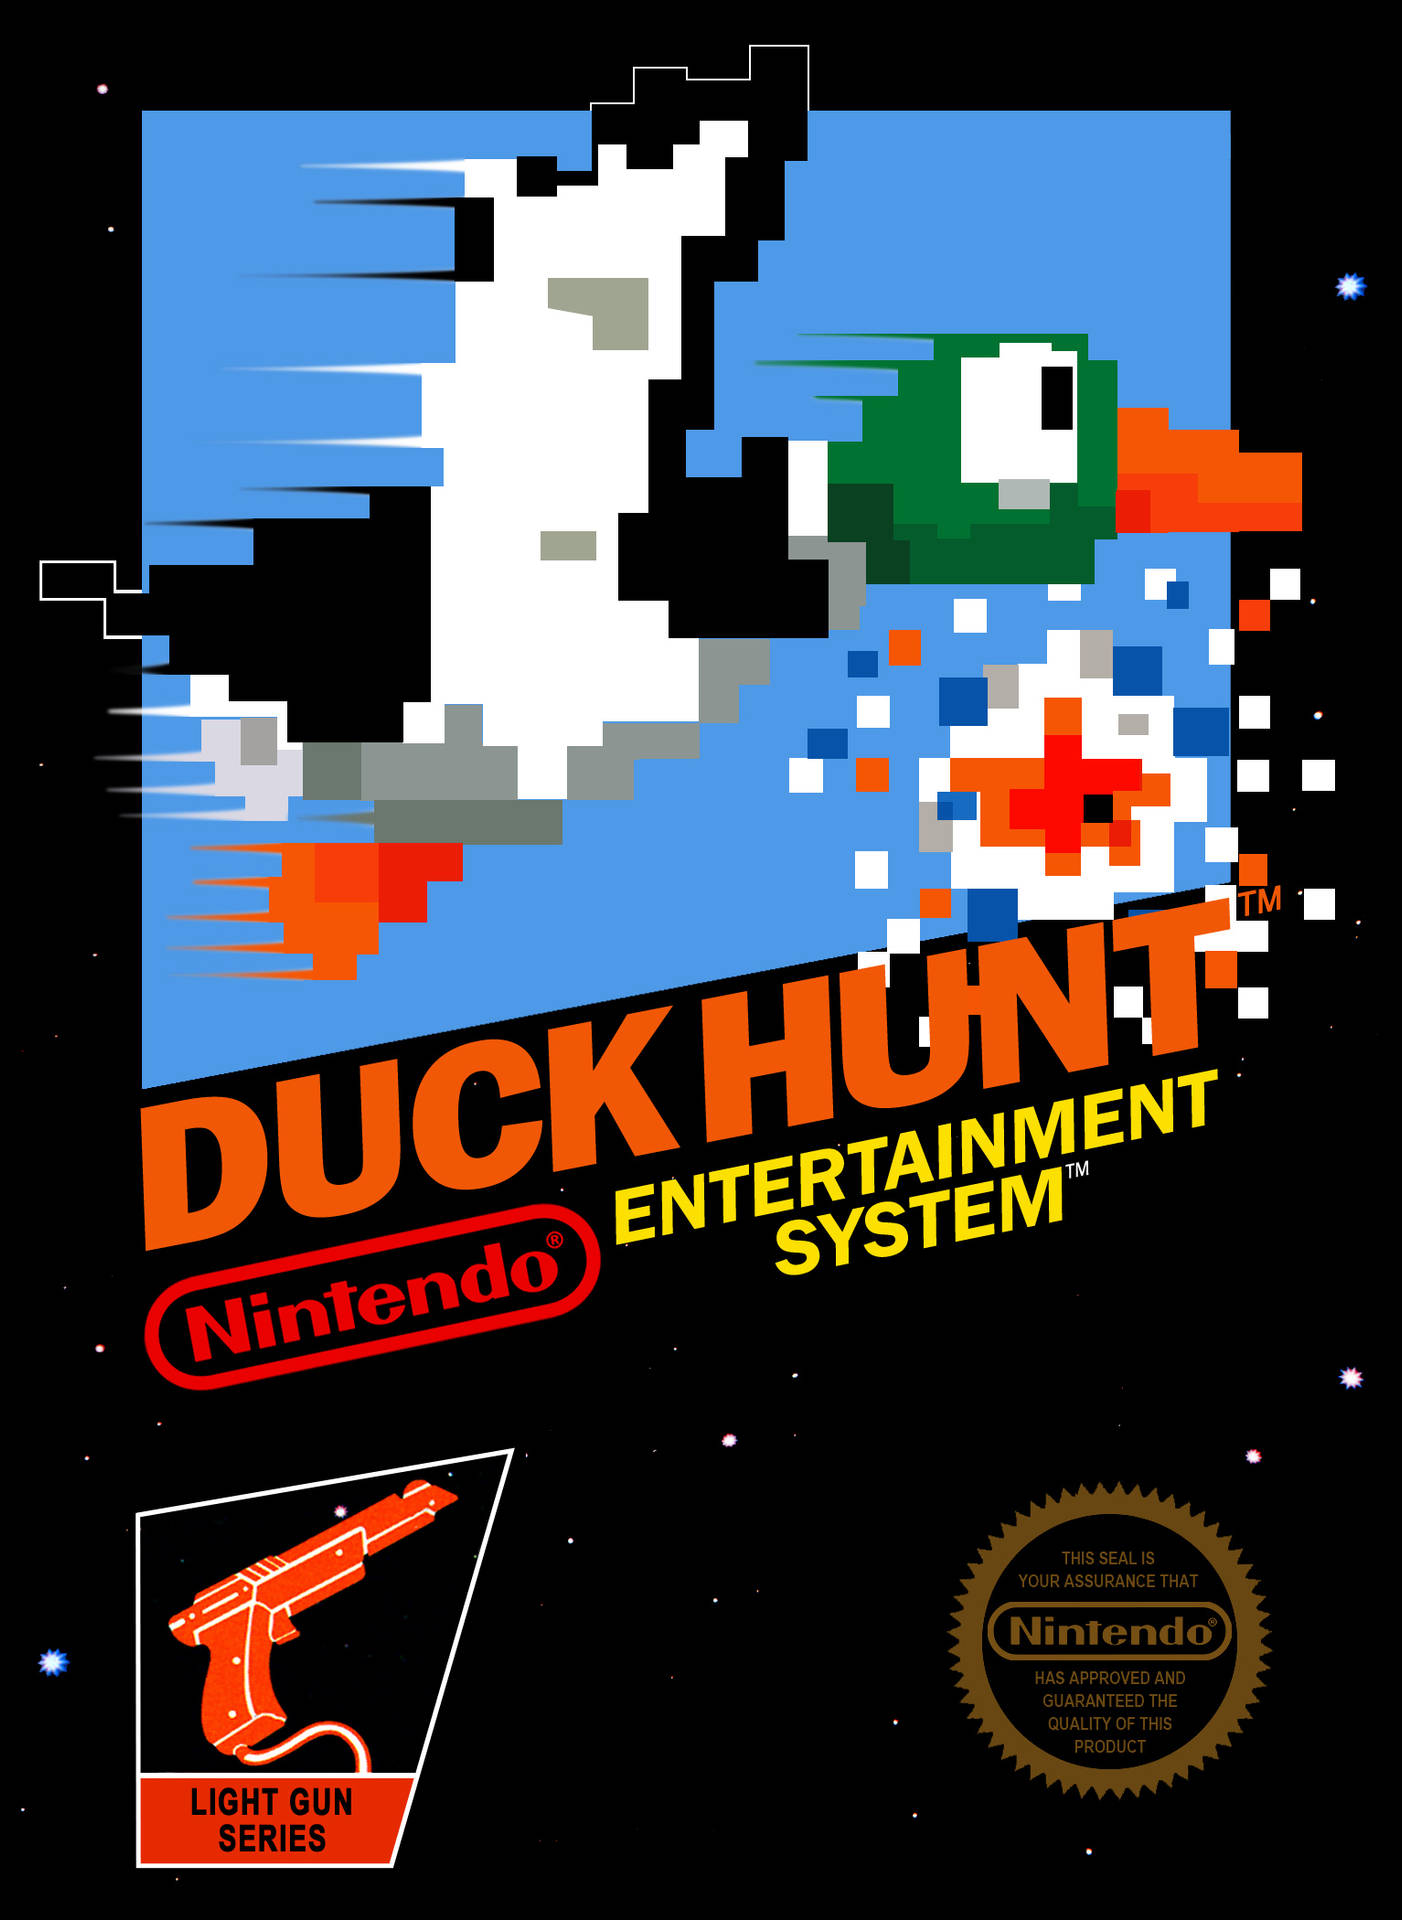 Duckhunt Nintendo Poster Wallpaper